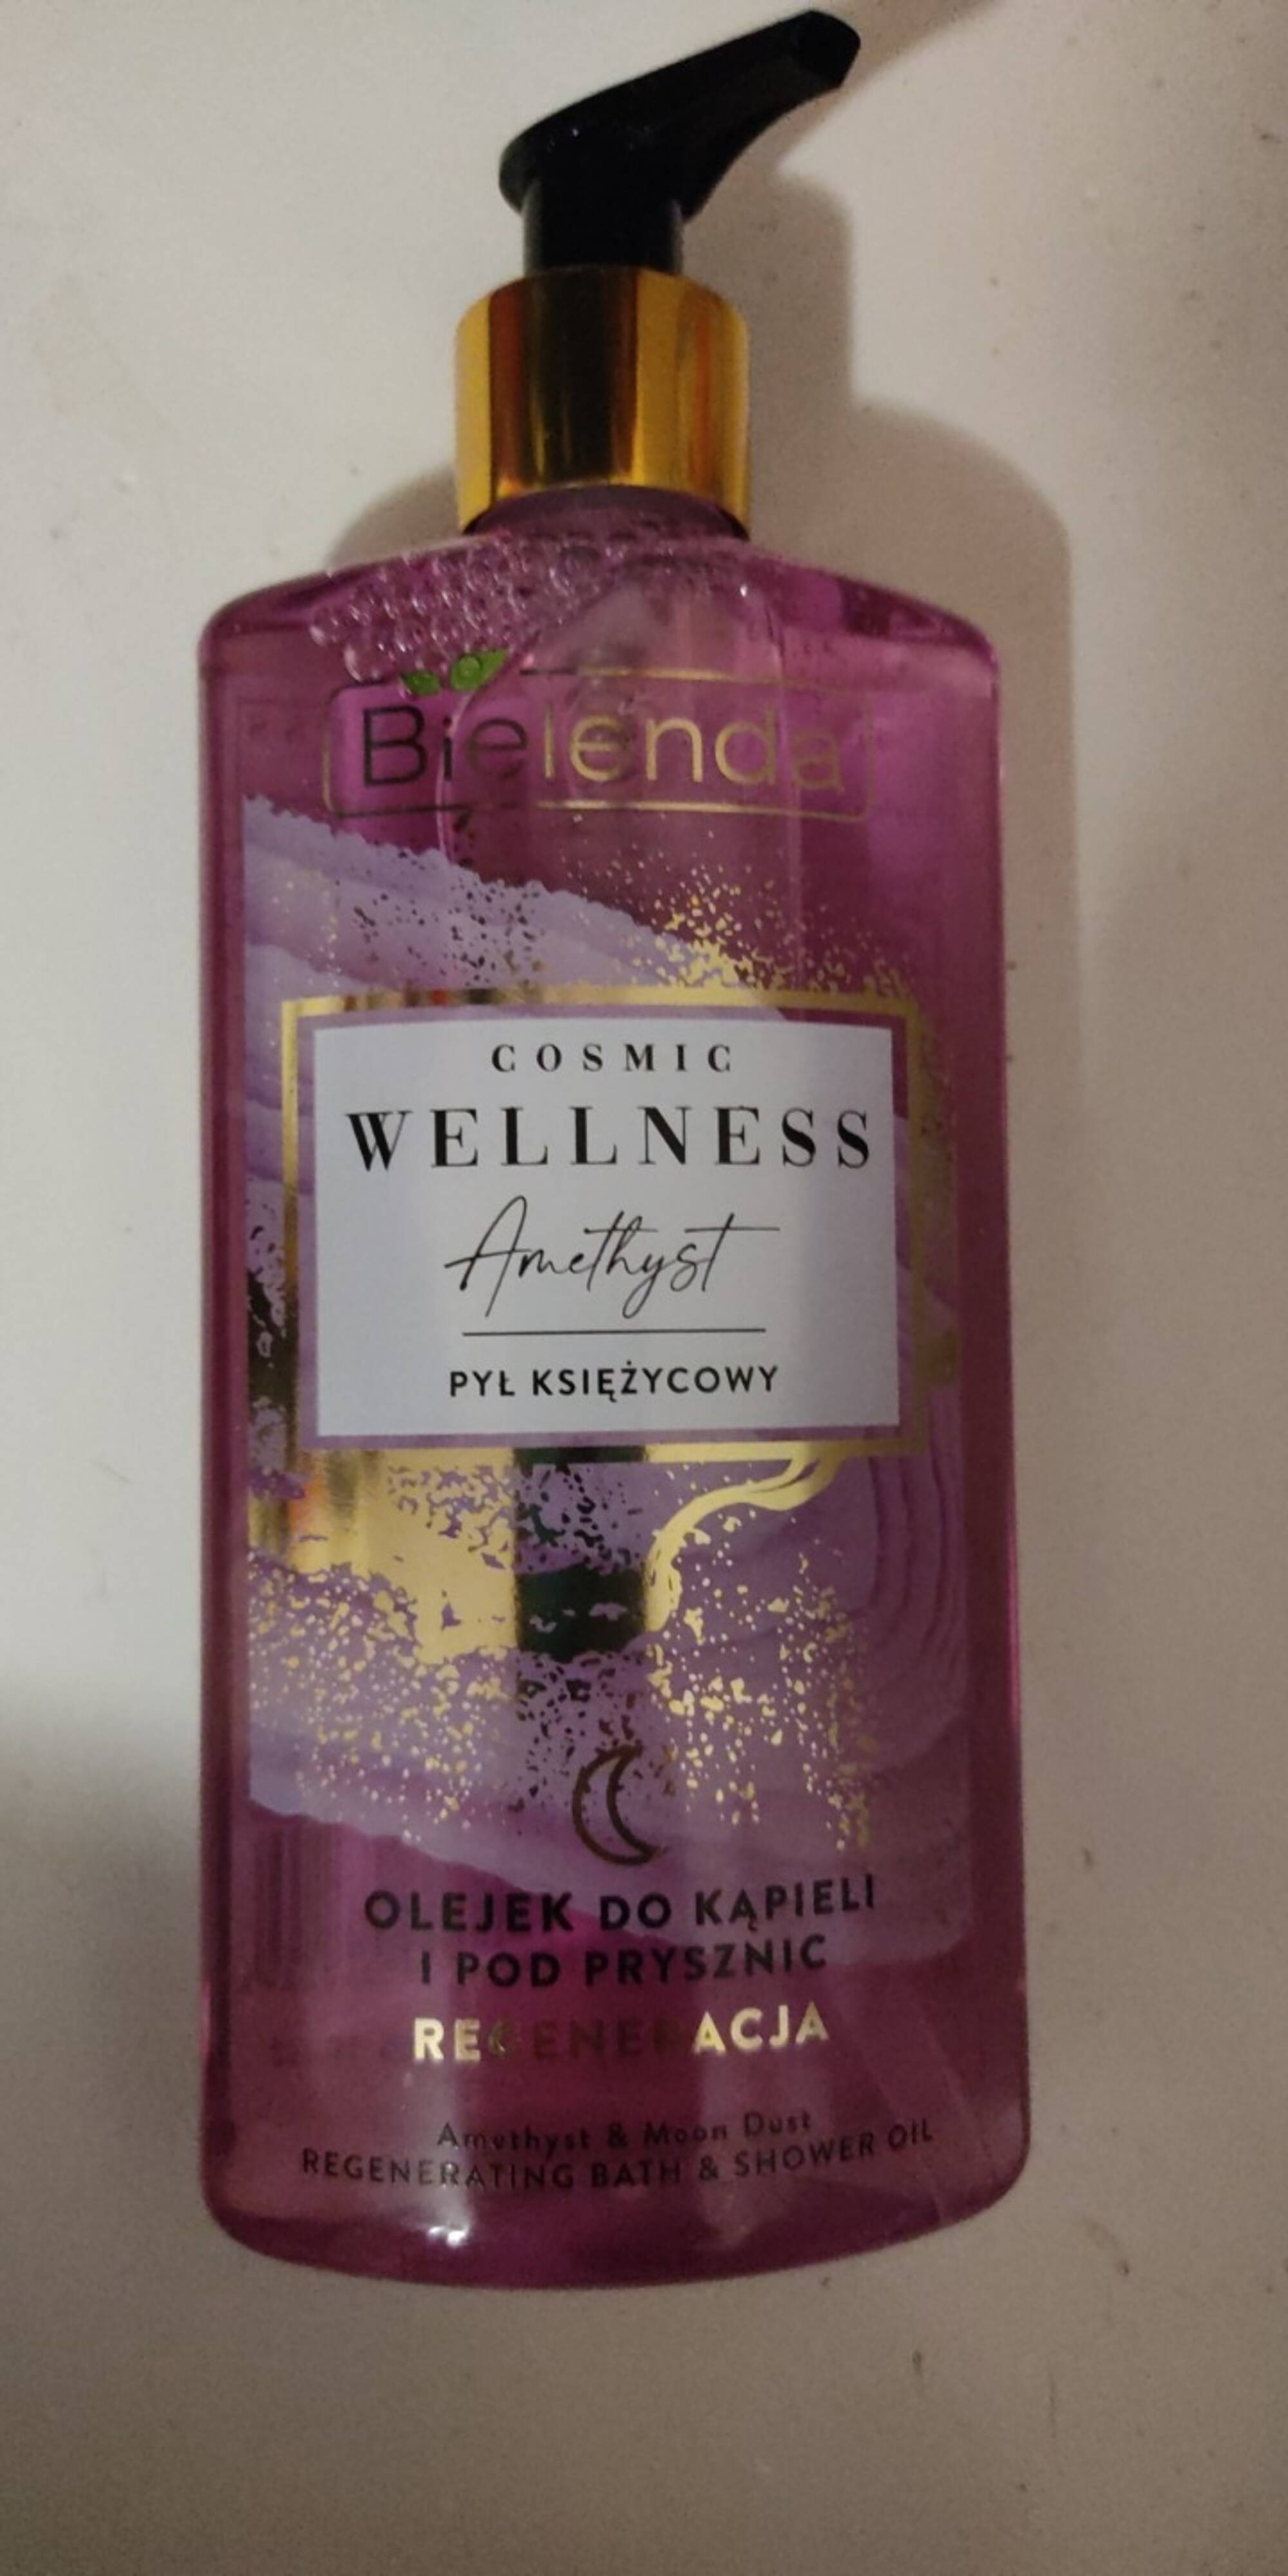 BIELENDA - Cosmic wellness - Regenerating bath & shower oil